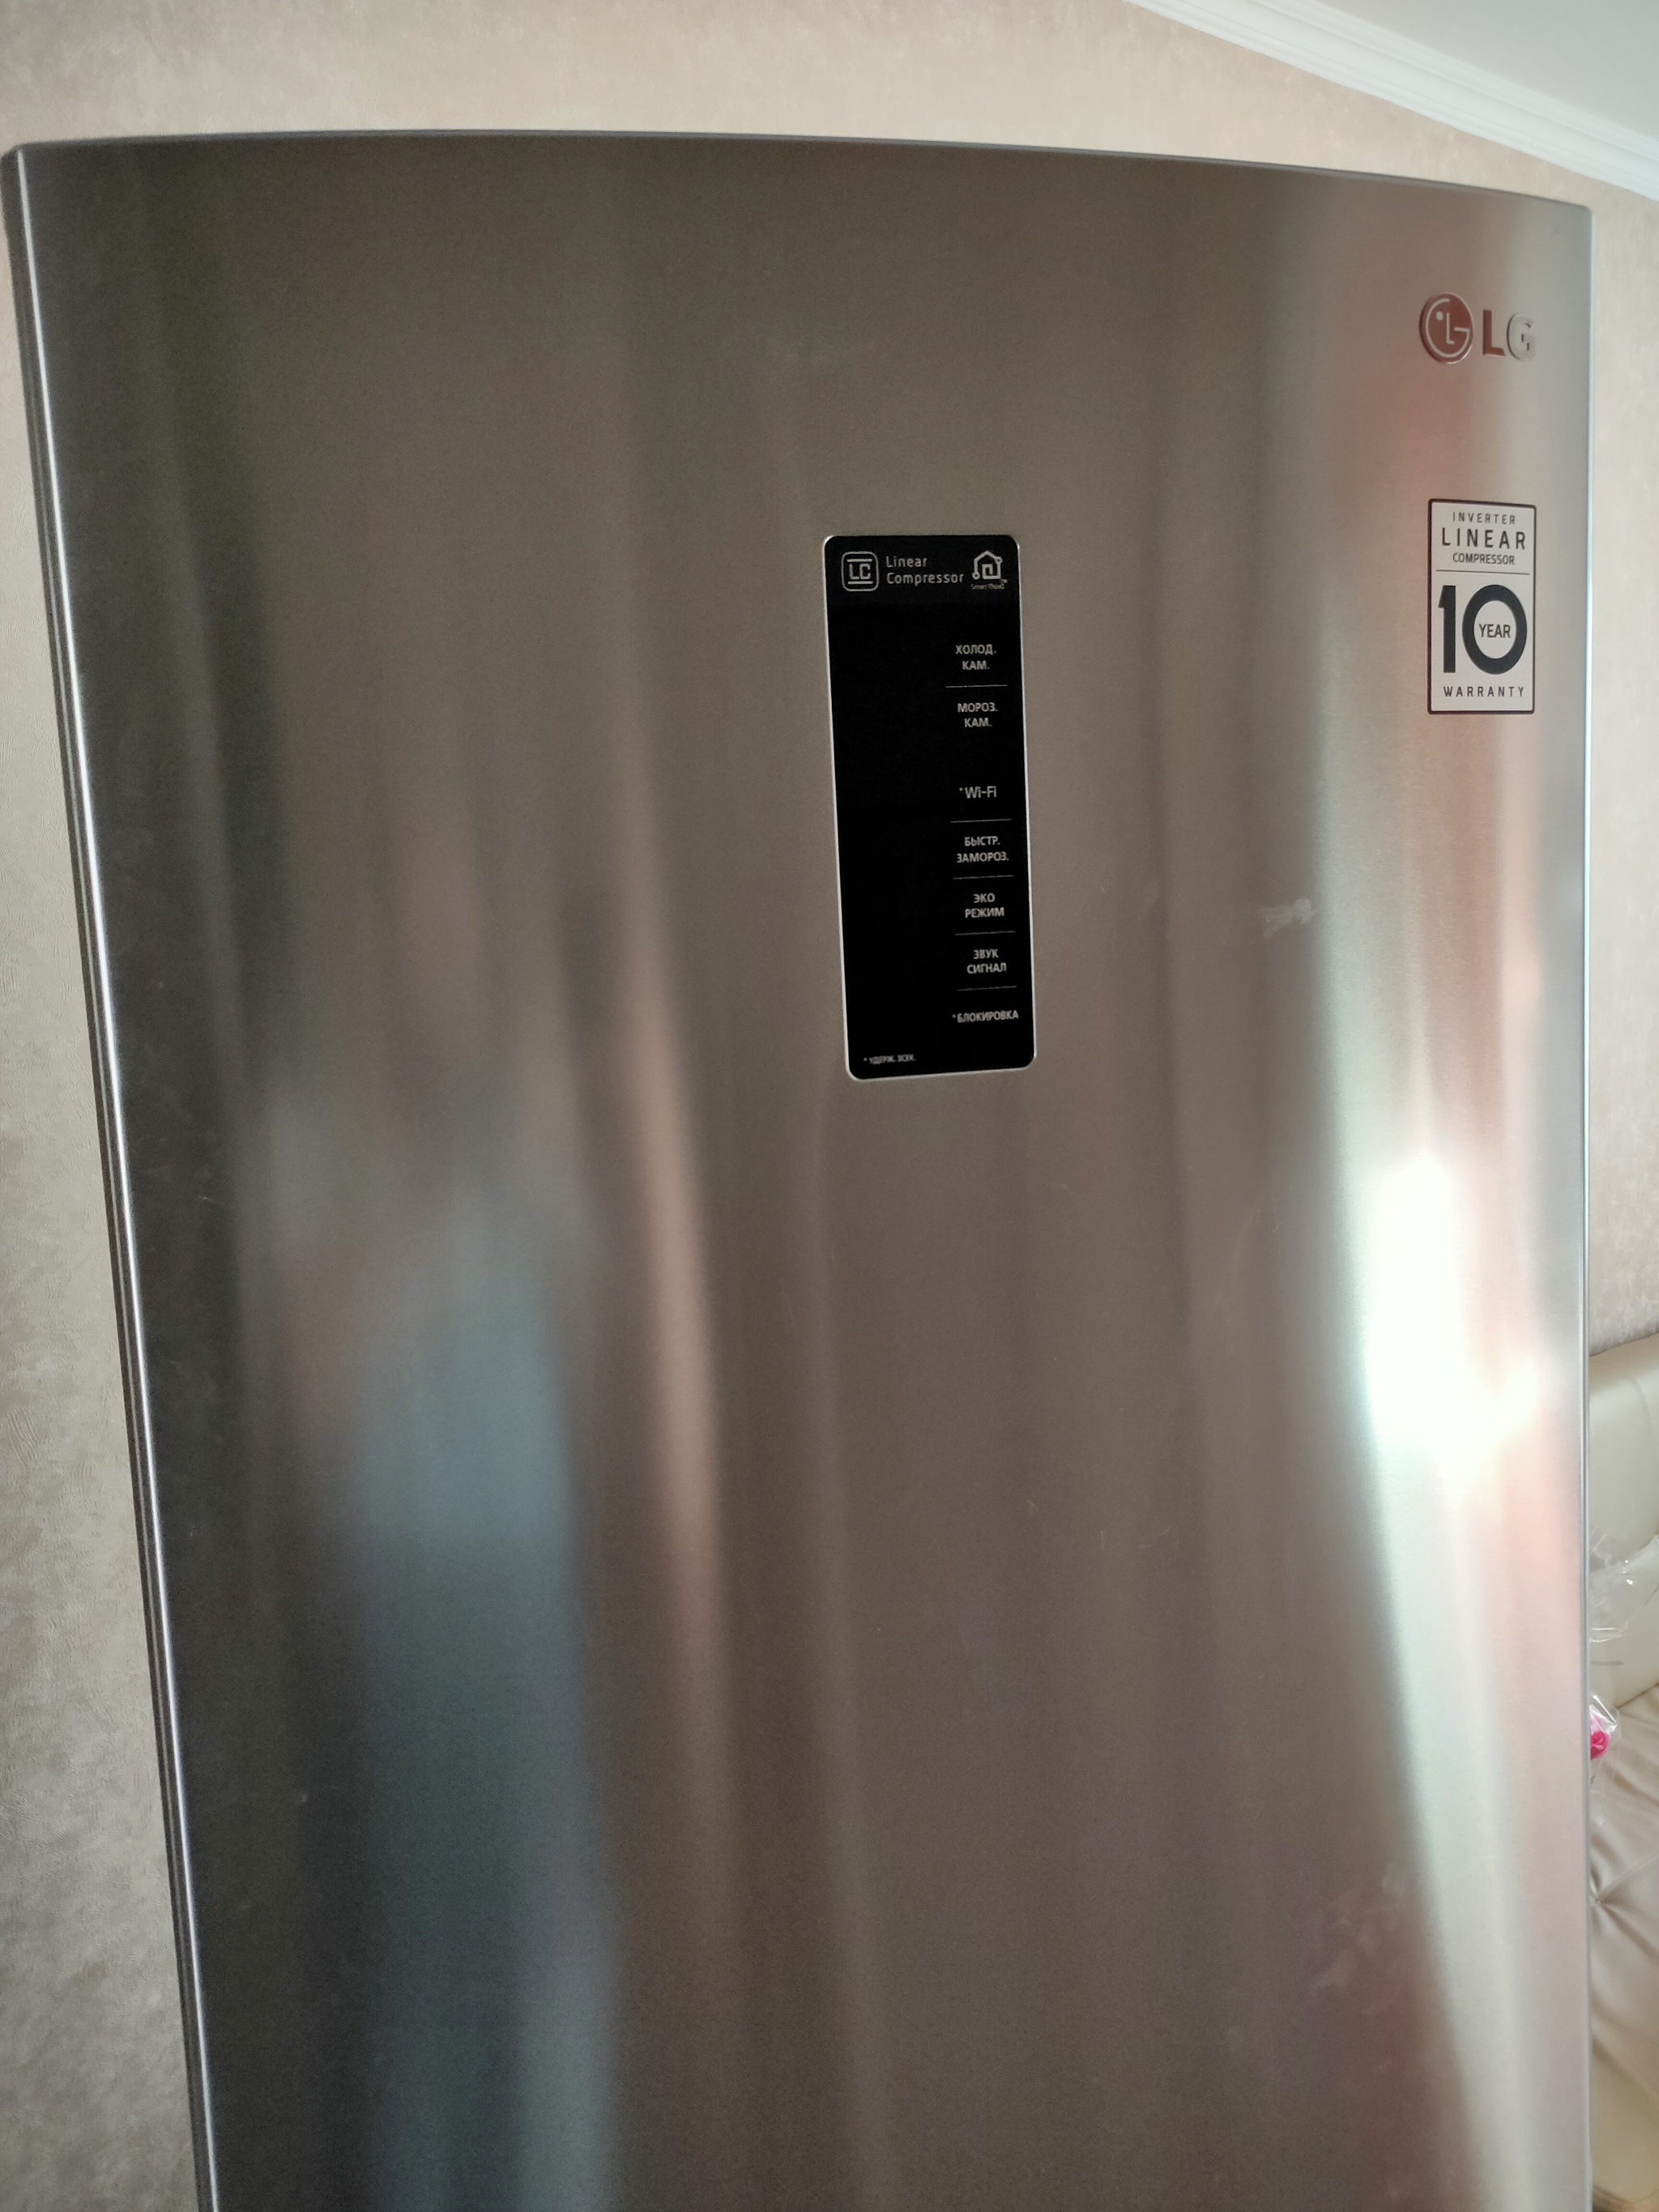 Гудит холодильник lg. Холодильник LG bz03. Лучшие холодильники LG 2019 года. Холодильник LG новинка 2019. Холодильник LG холодный заслон.